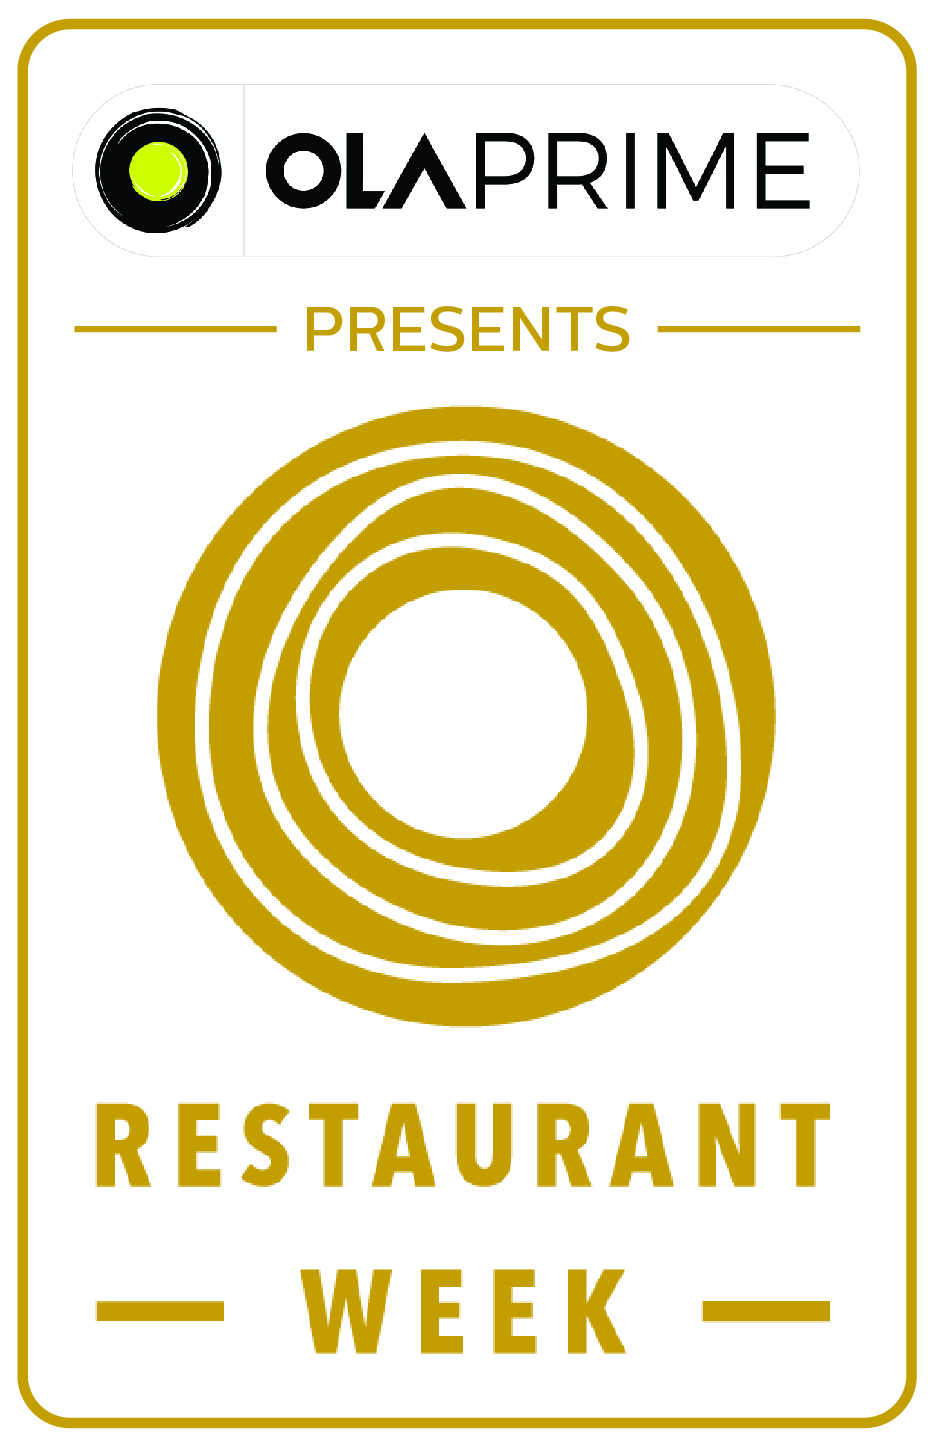 Ola Prime Presents Restaurant Week in Kolkata| Pre-Event Listing|cherryontopblog.com